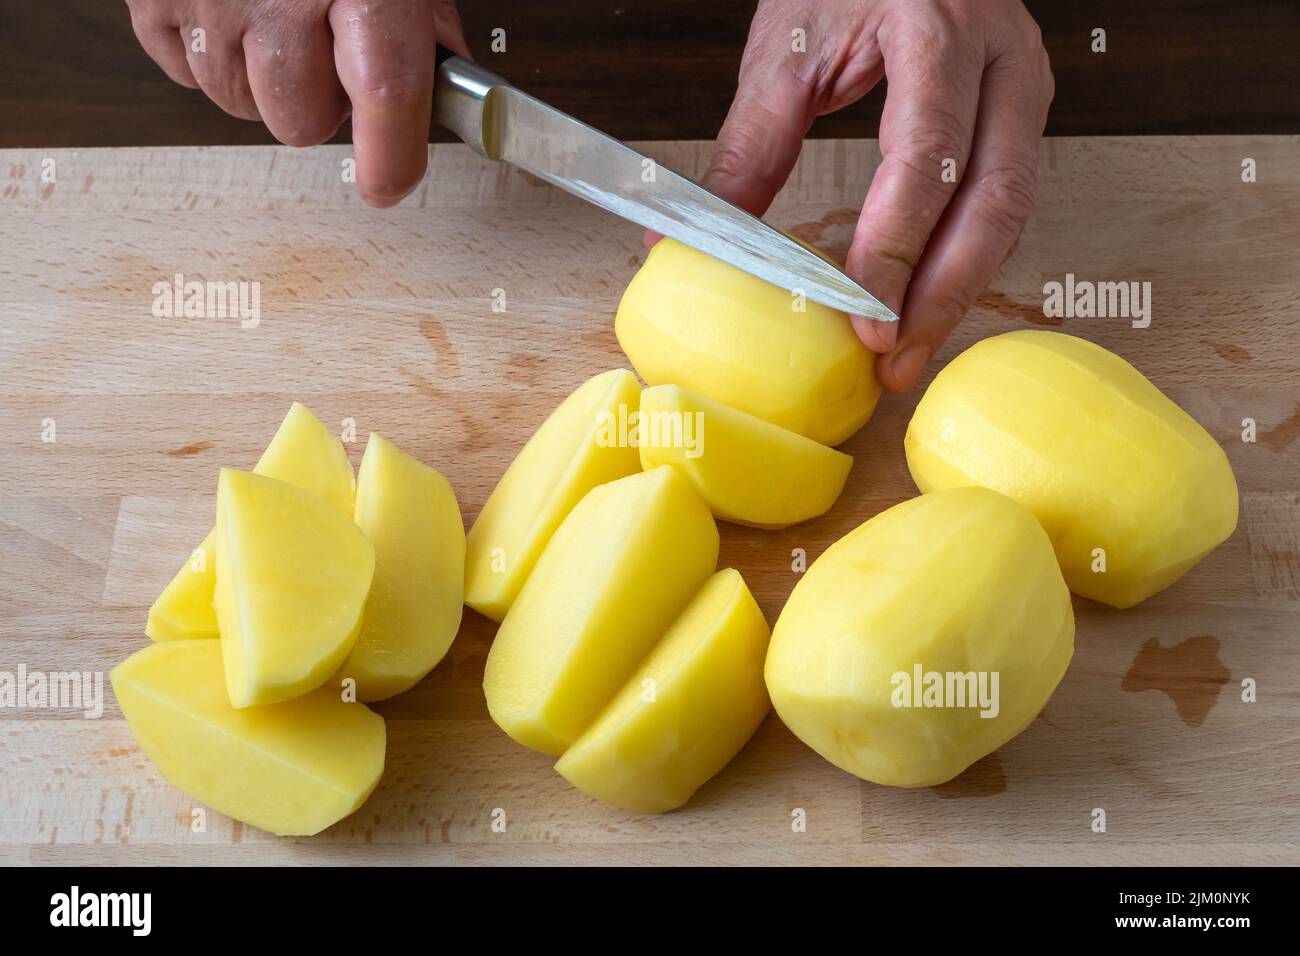 https://c8.alamy.com/comp/2JM0NYK/hands-with-knife-cutting-potatoes-preparing-potatoes-for-cooking-2JM0NYK.jpg